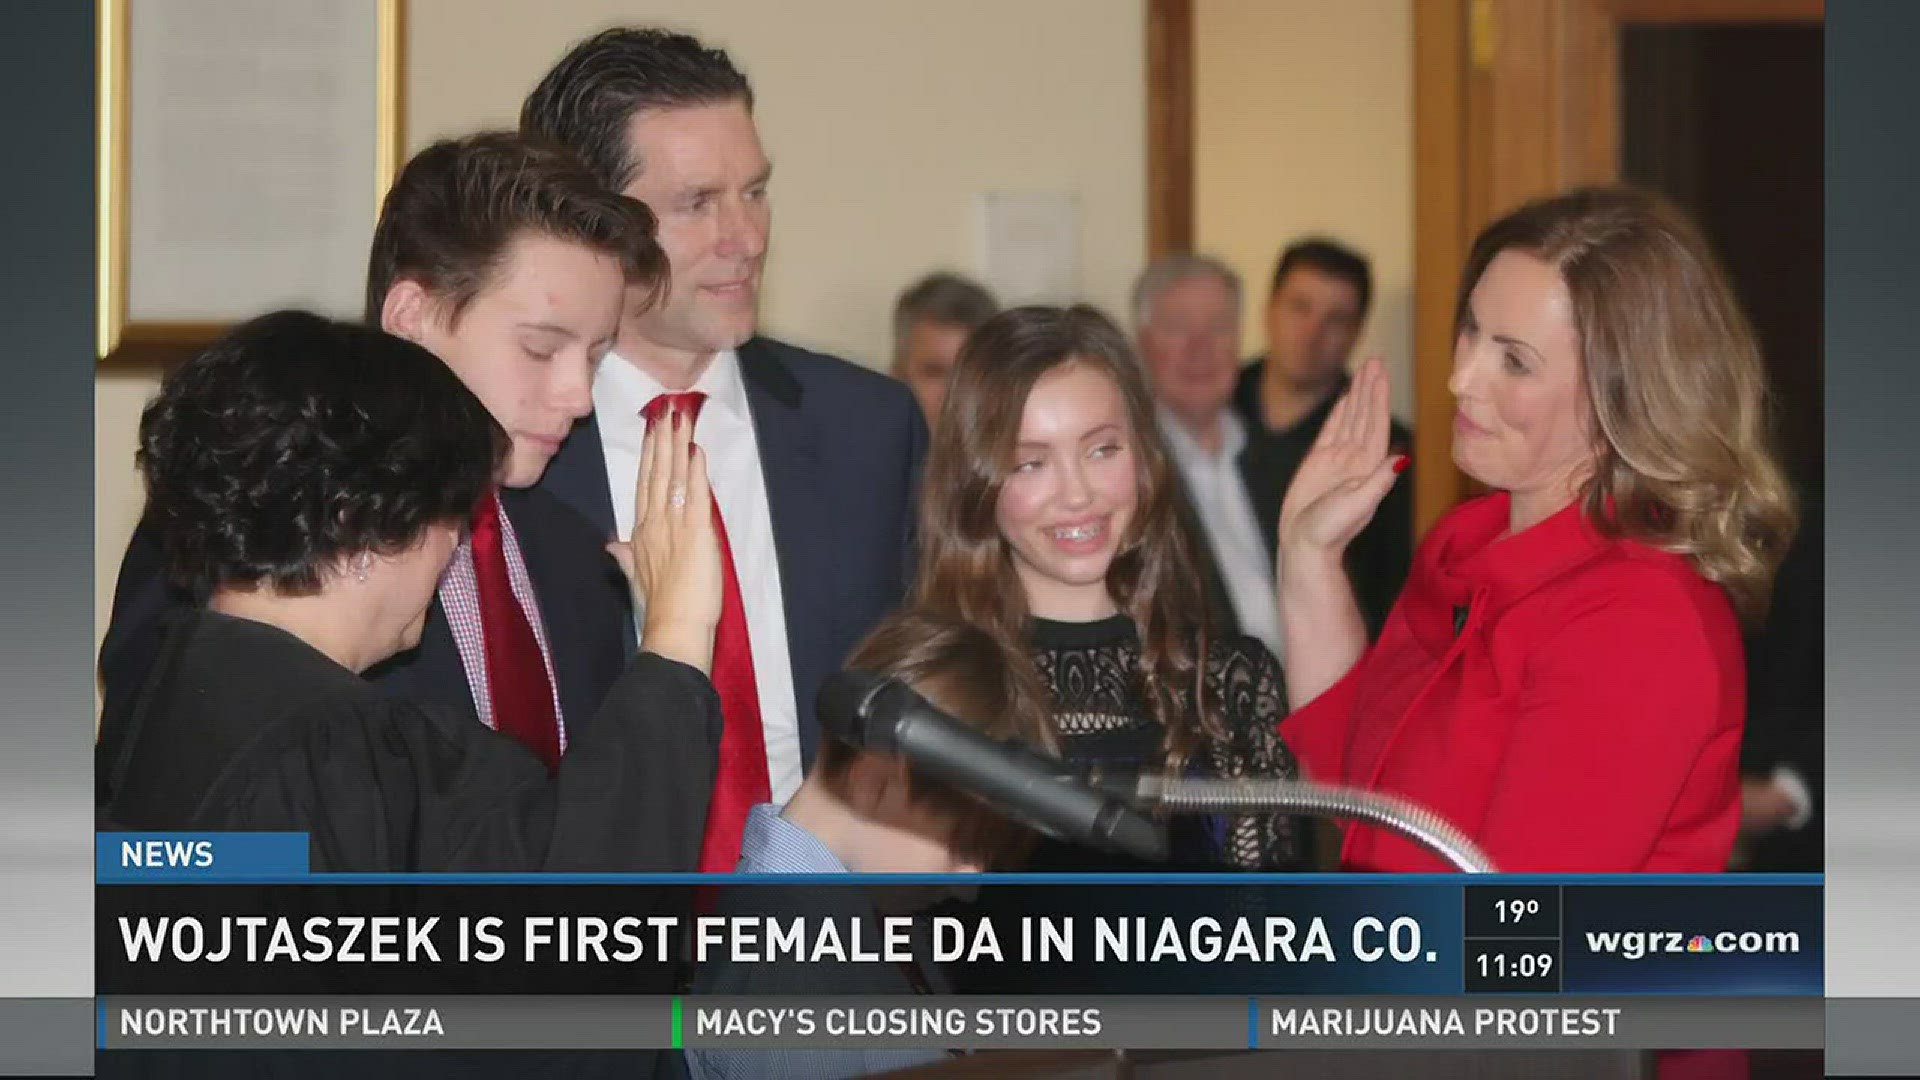 Wojtaszek Is First Female DA In Niagara Co.